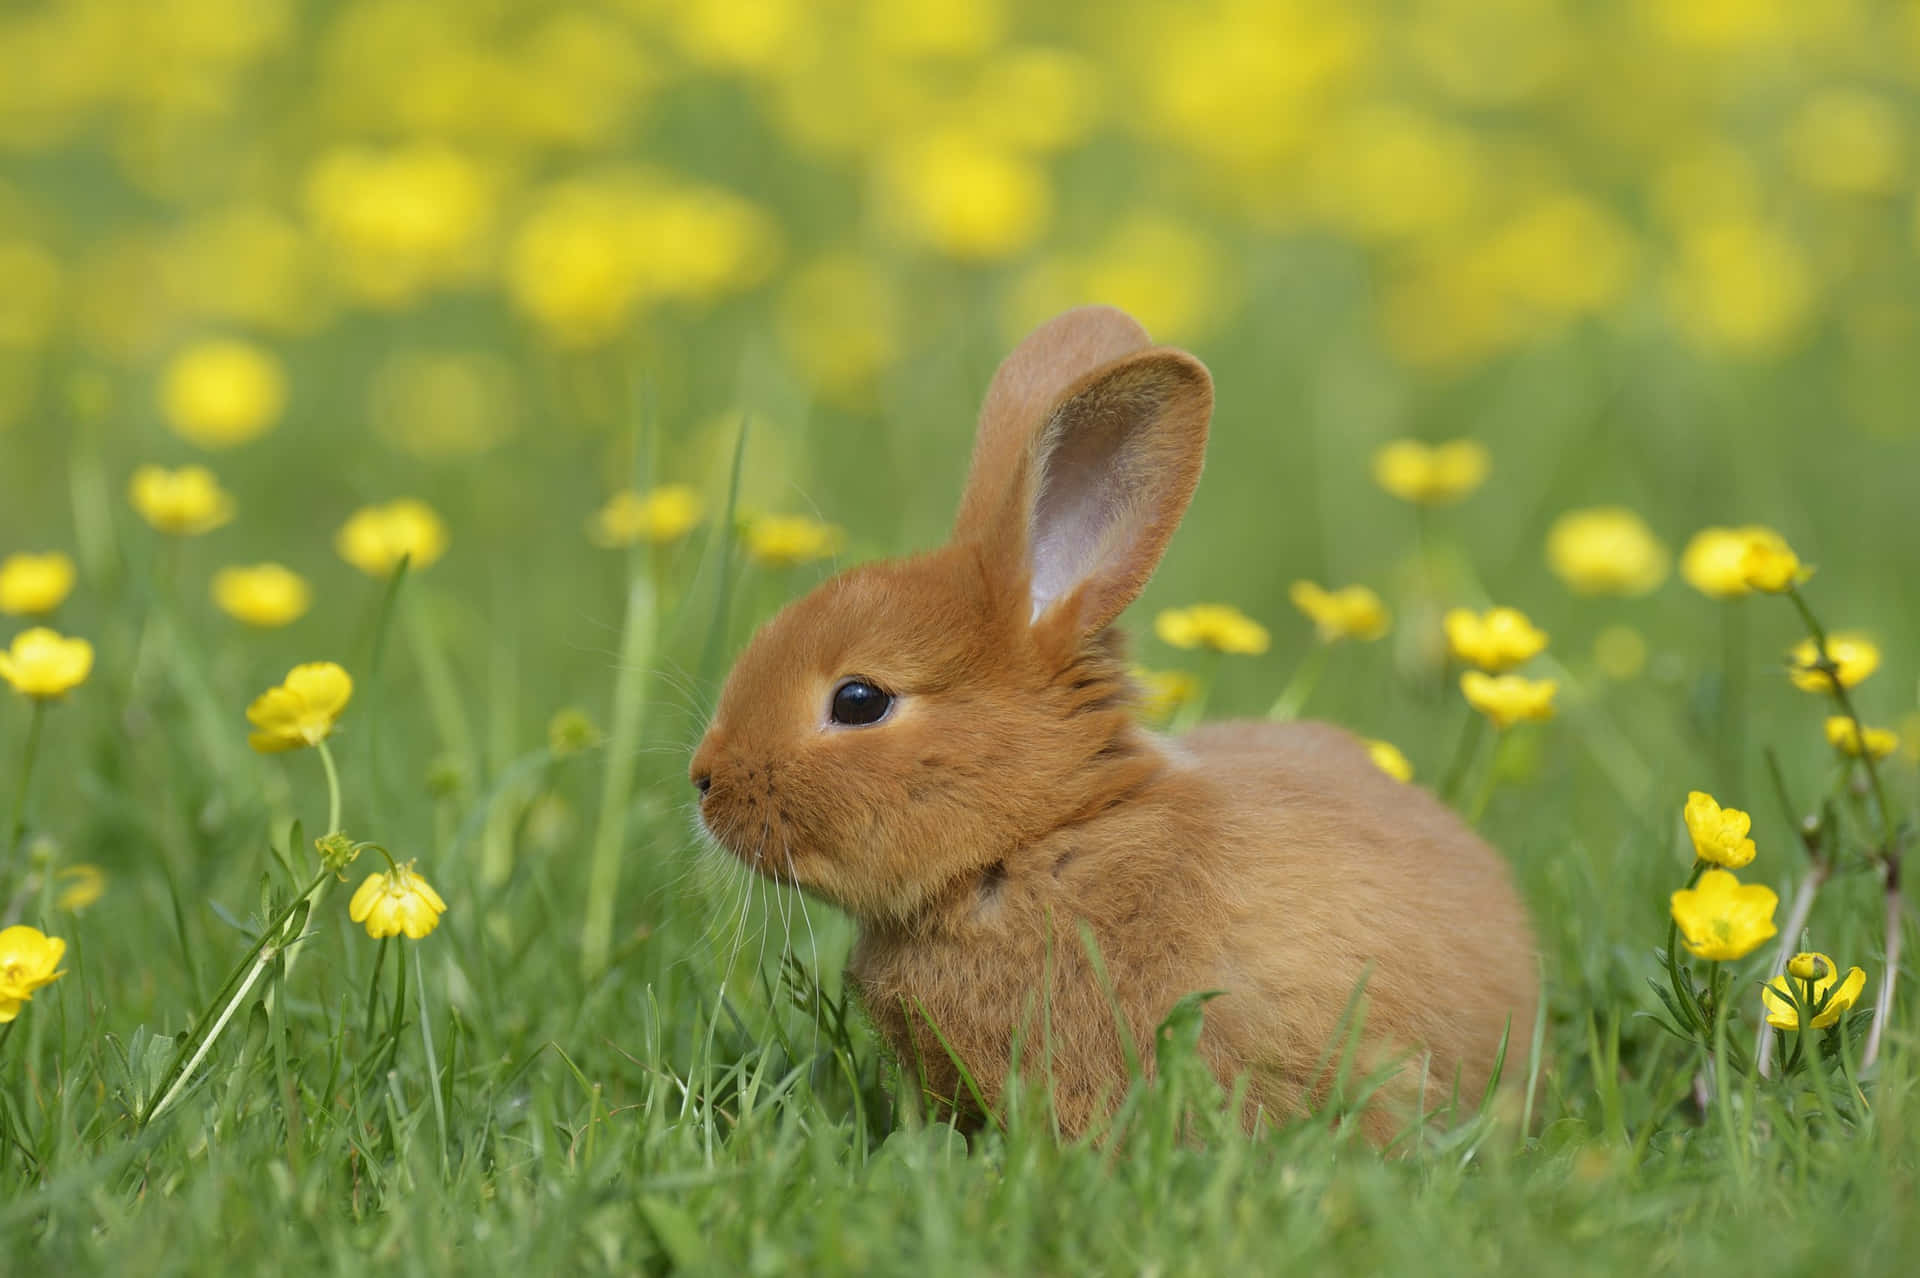 Cute Rabbit Pictures Wallpaper